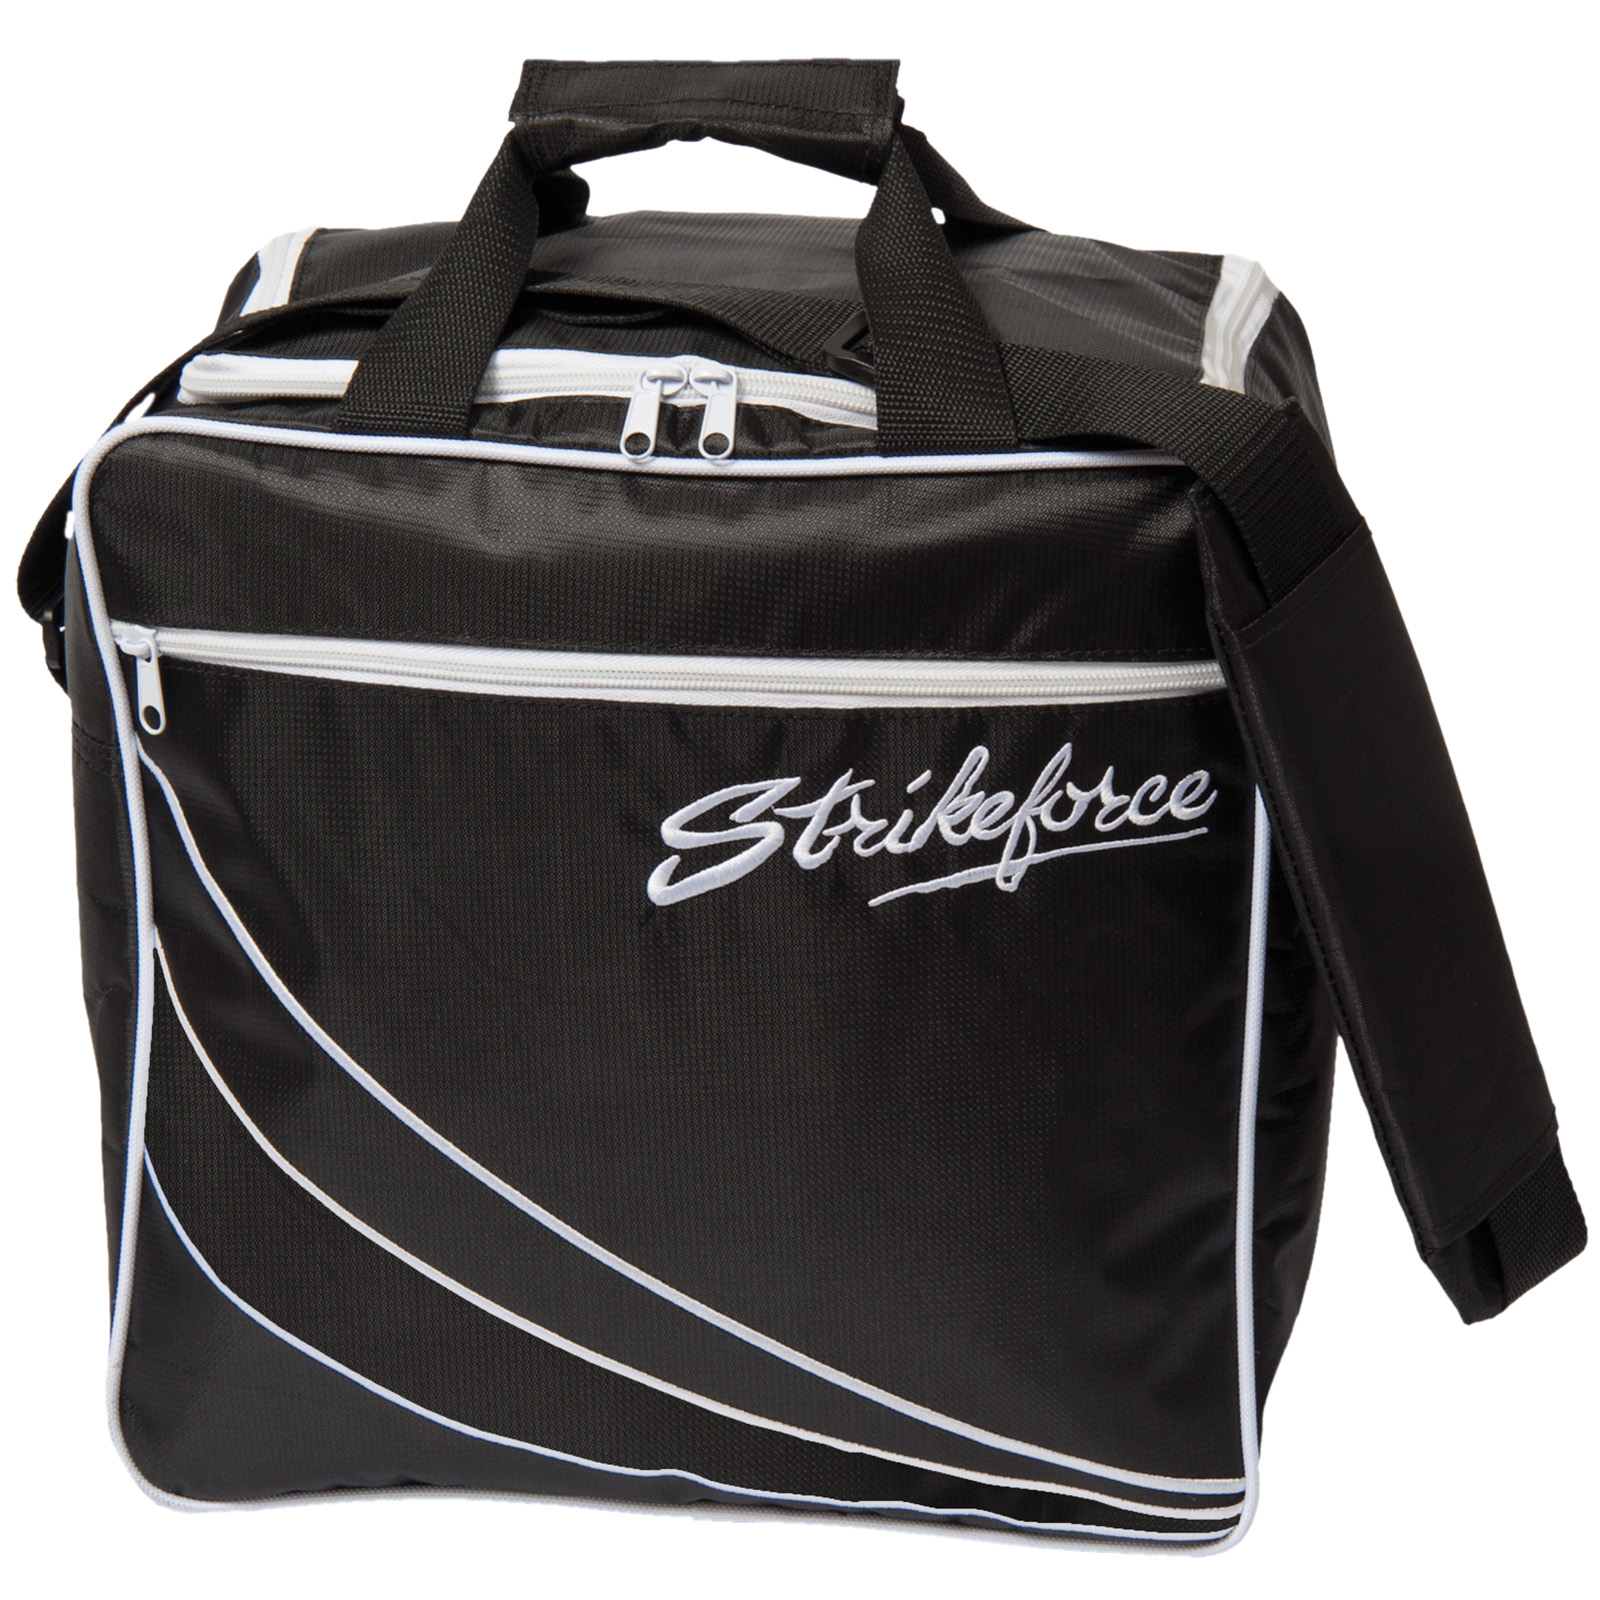 KR Strikeforce Kraze Black Single Bag  - Includes Free Oversized Shipping!